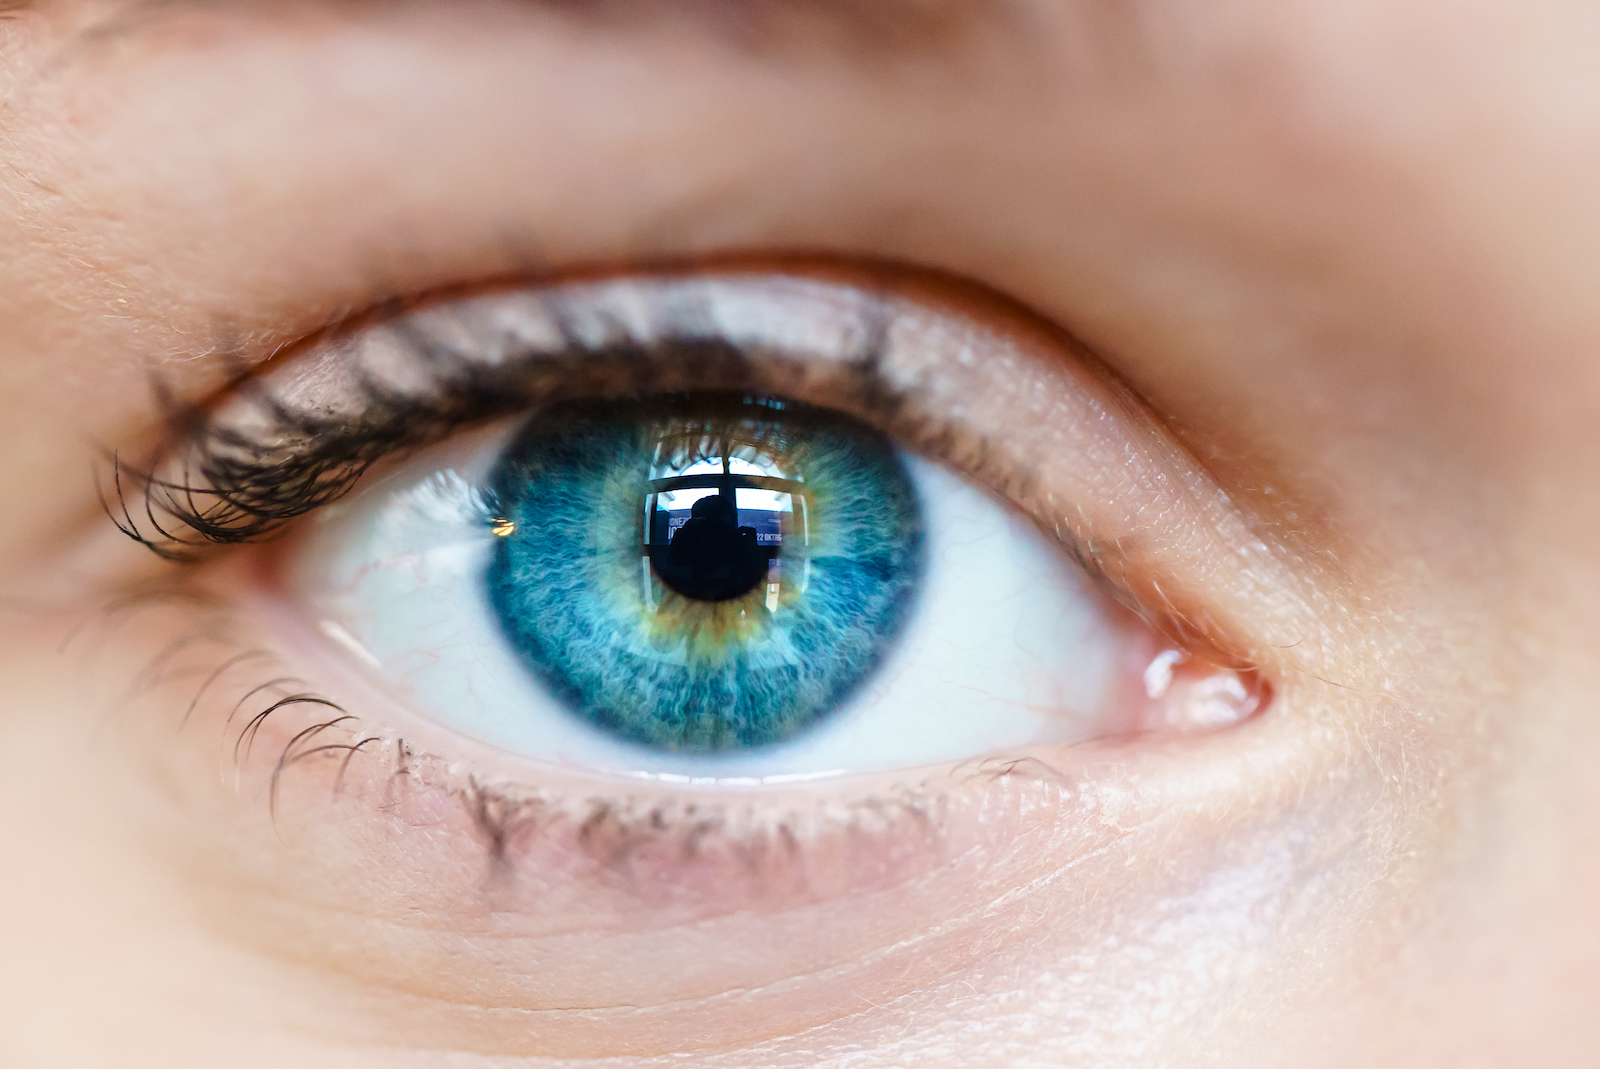 17 lucruri interesante despre ochi și vedere